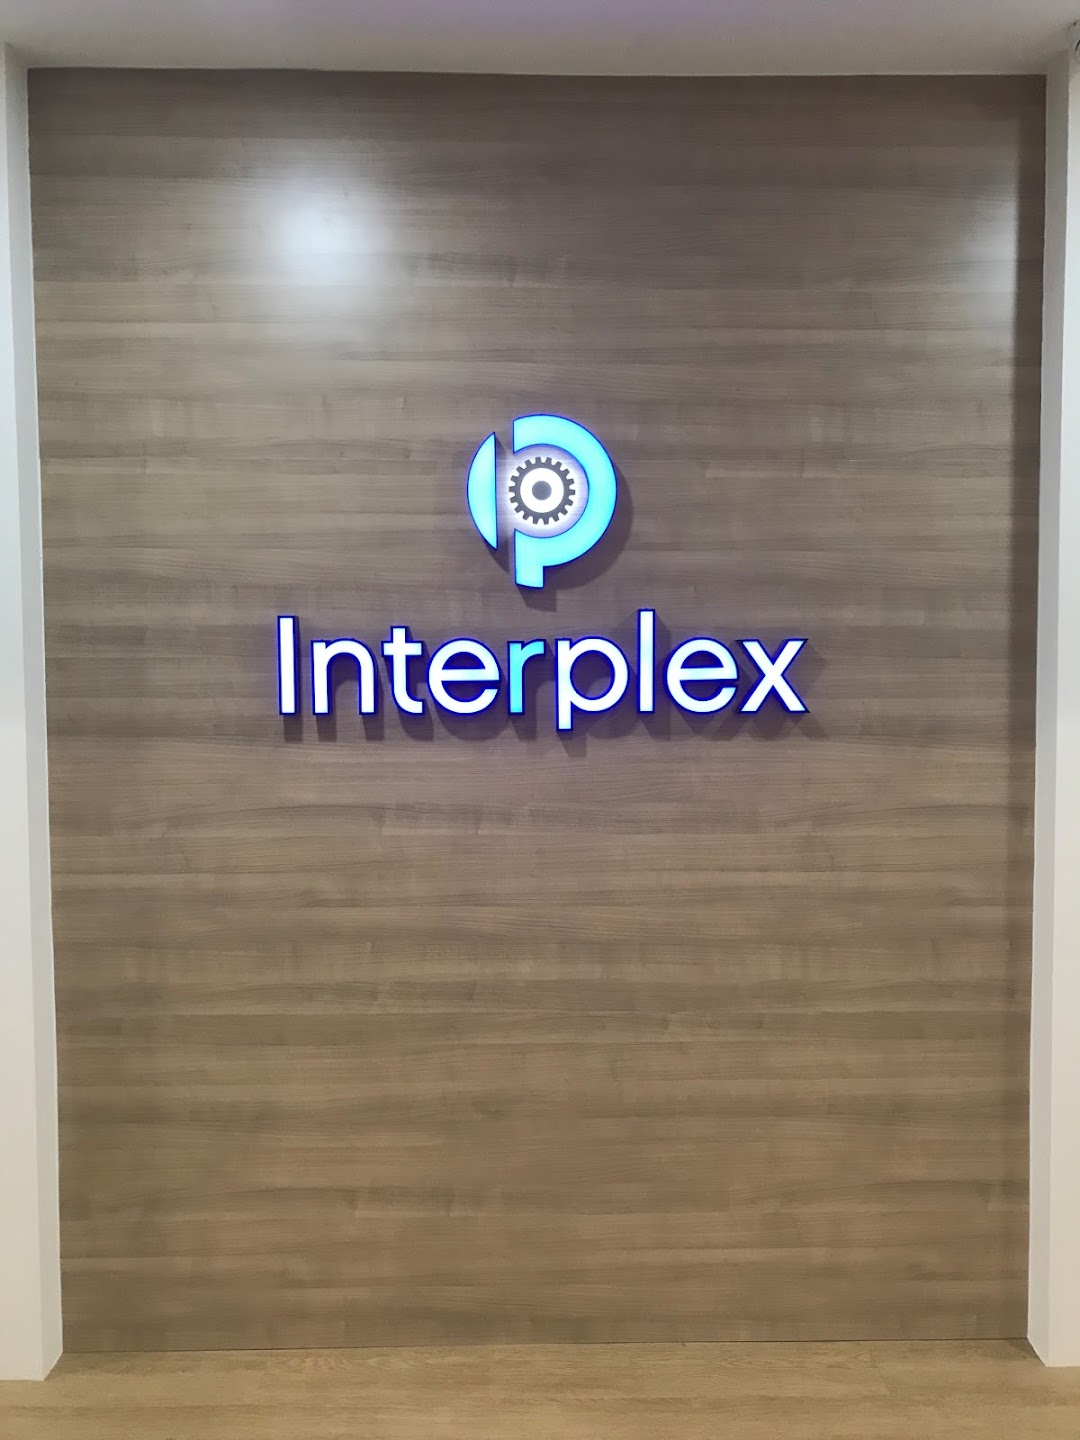 Interplex Holdings Pte. Ltd.